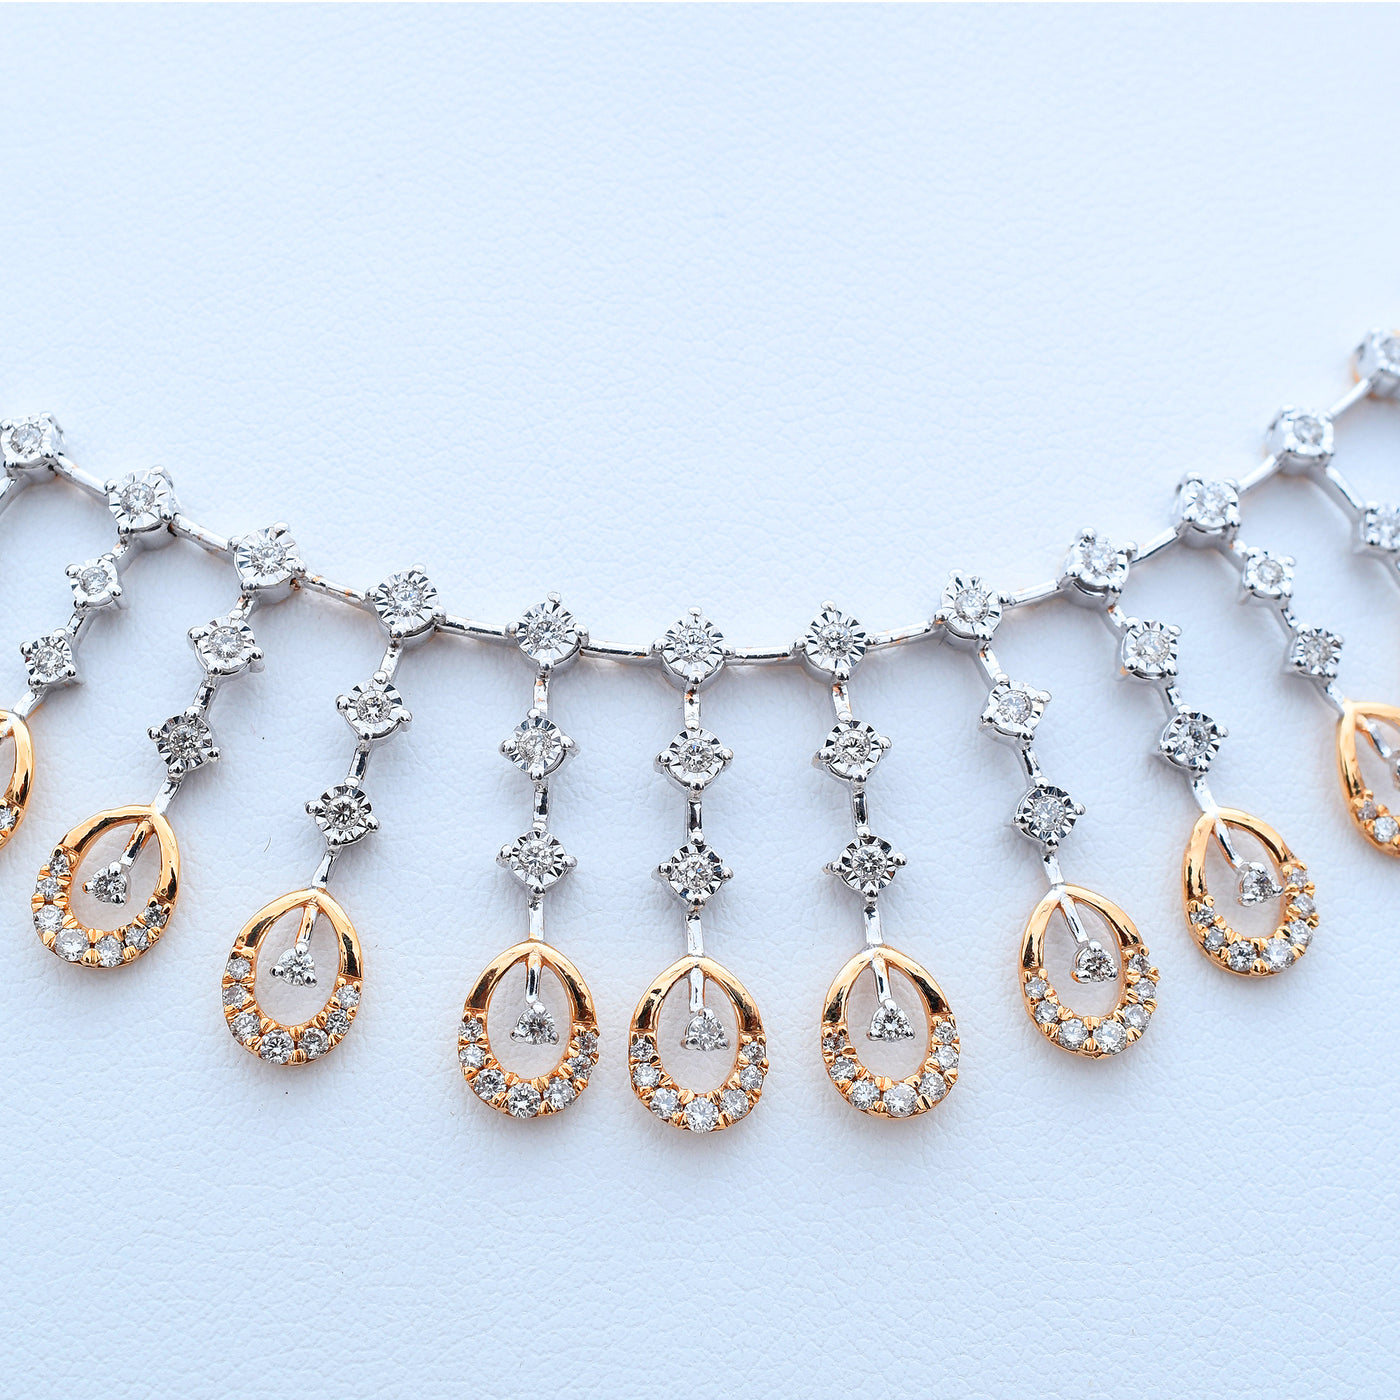 The Mallika Diamond Necklace Set